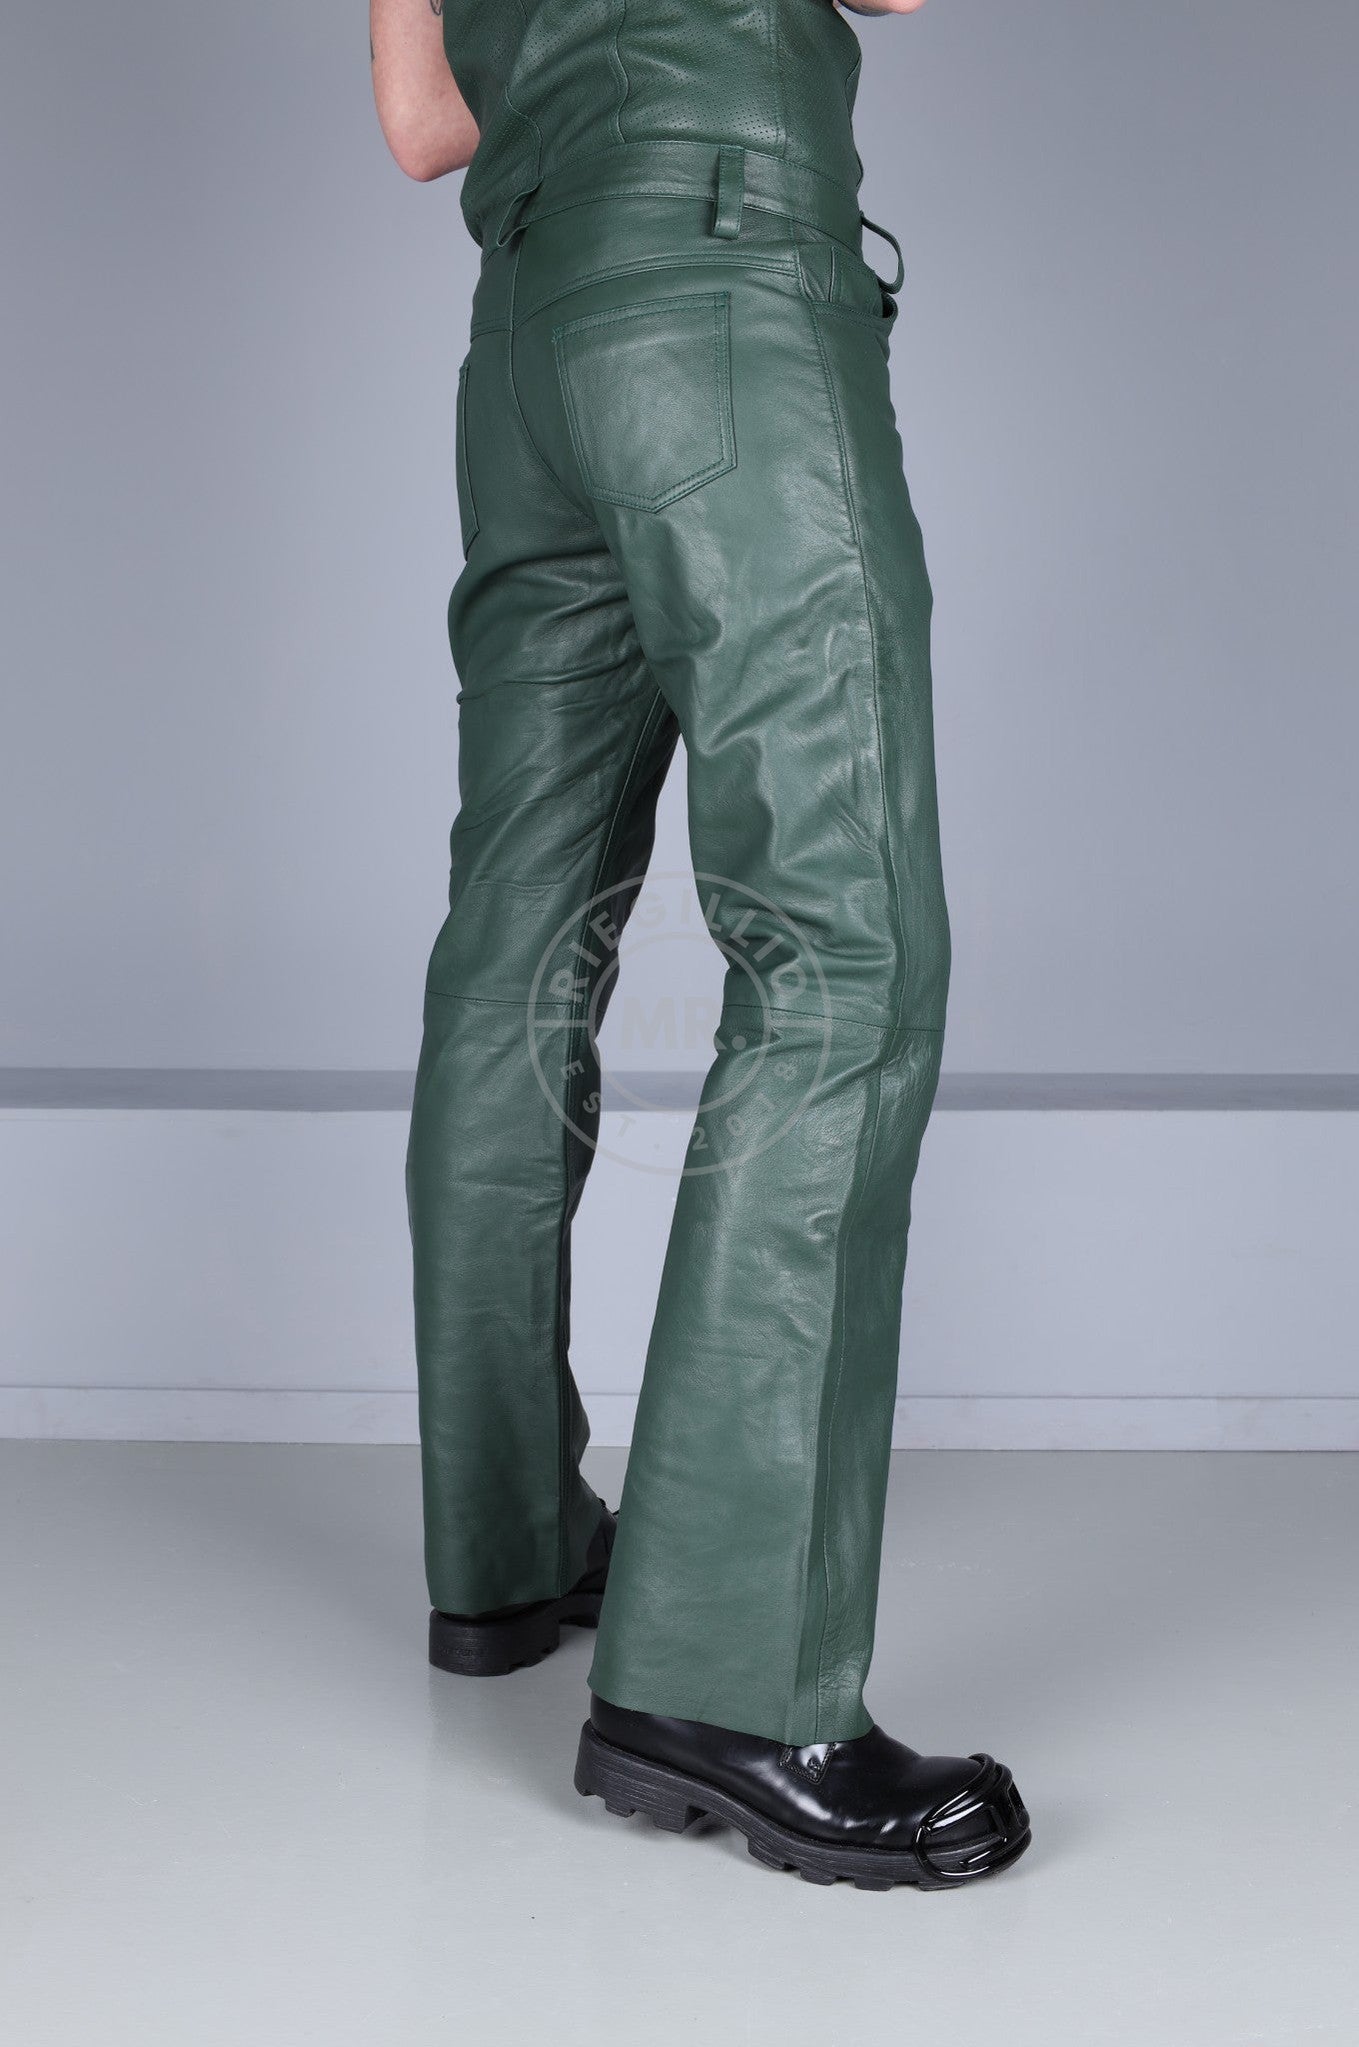 Dark Green Leather Bootcut Pants at MR. Riegillio